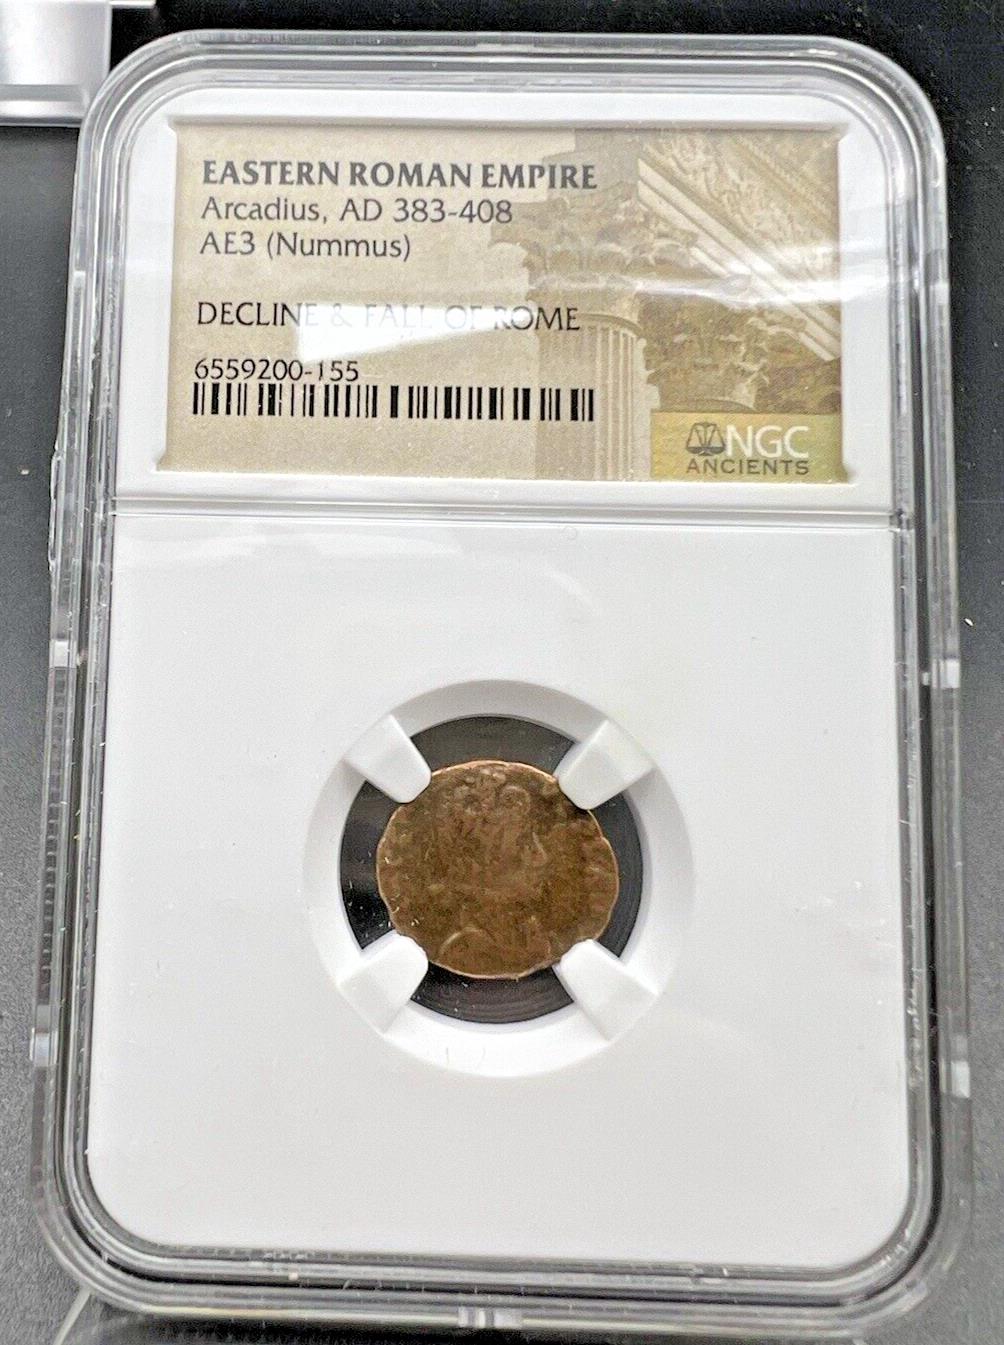 Eastern ROMAN EMPIRE Arcadius AD 383-408 AE3 Nummus Rome Ancient bronze coin NGC